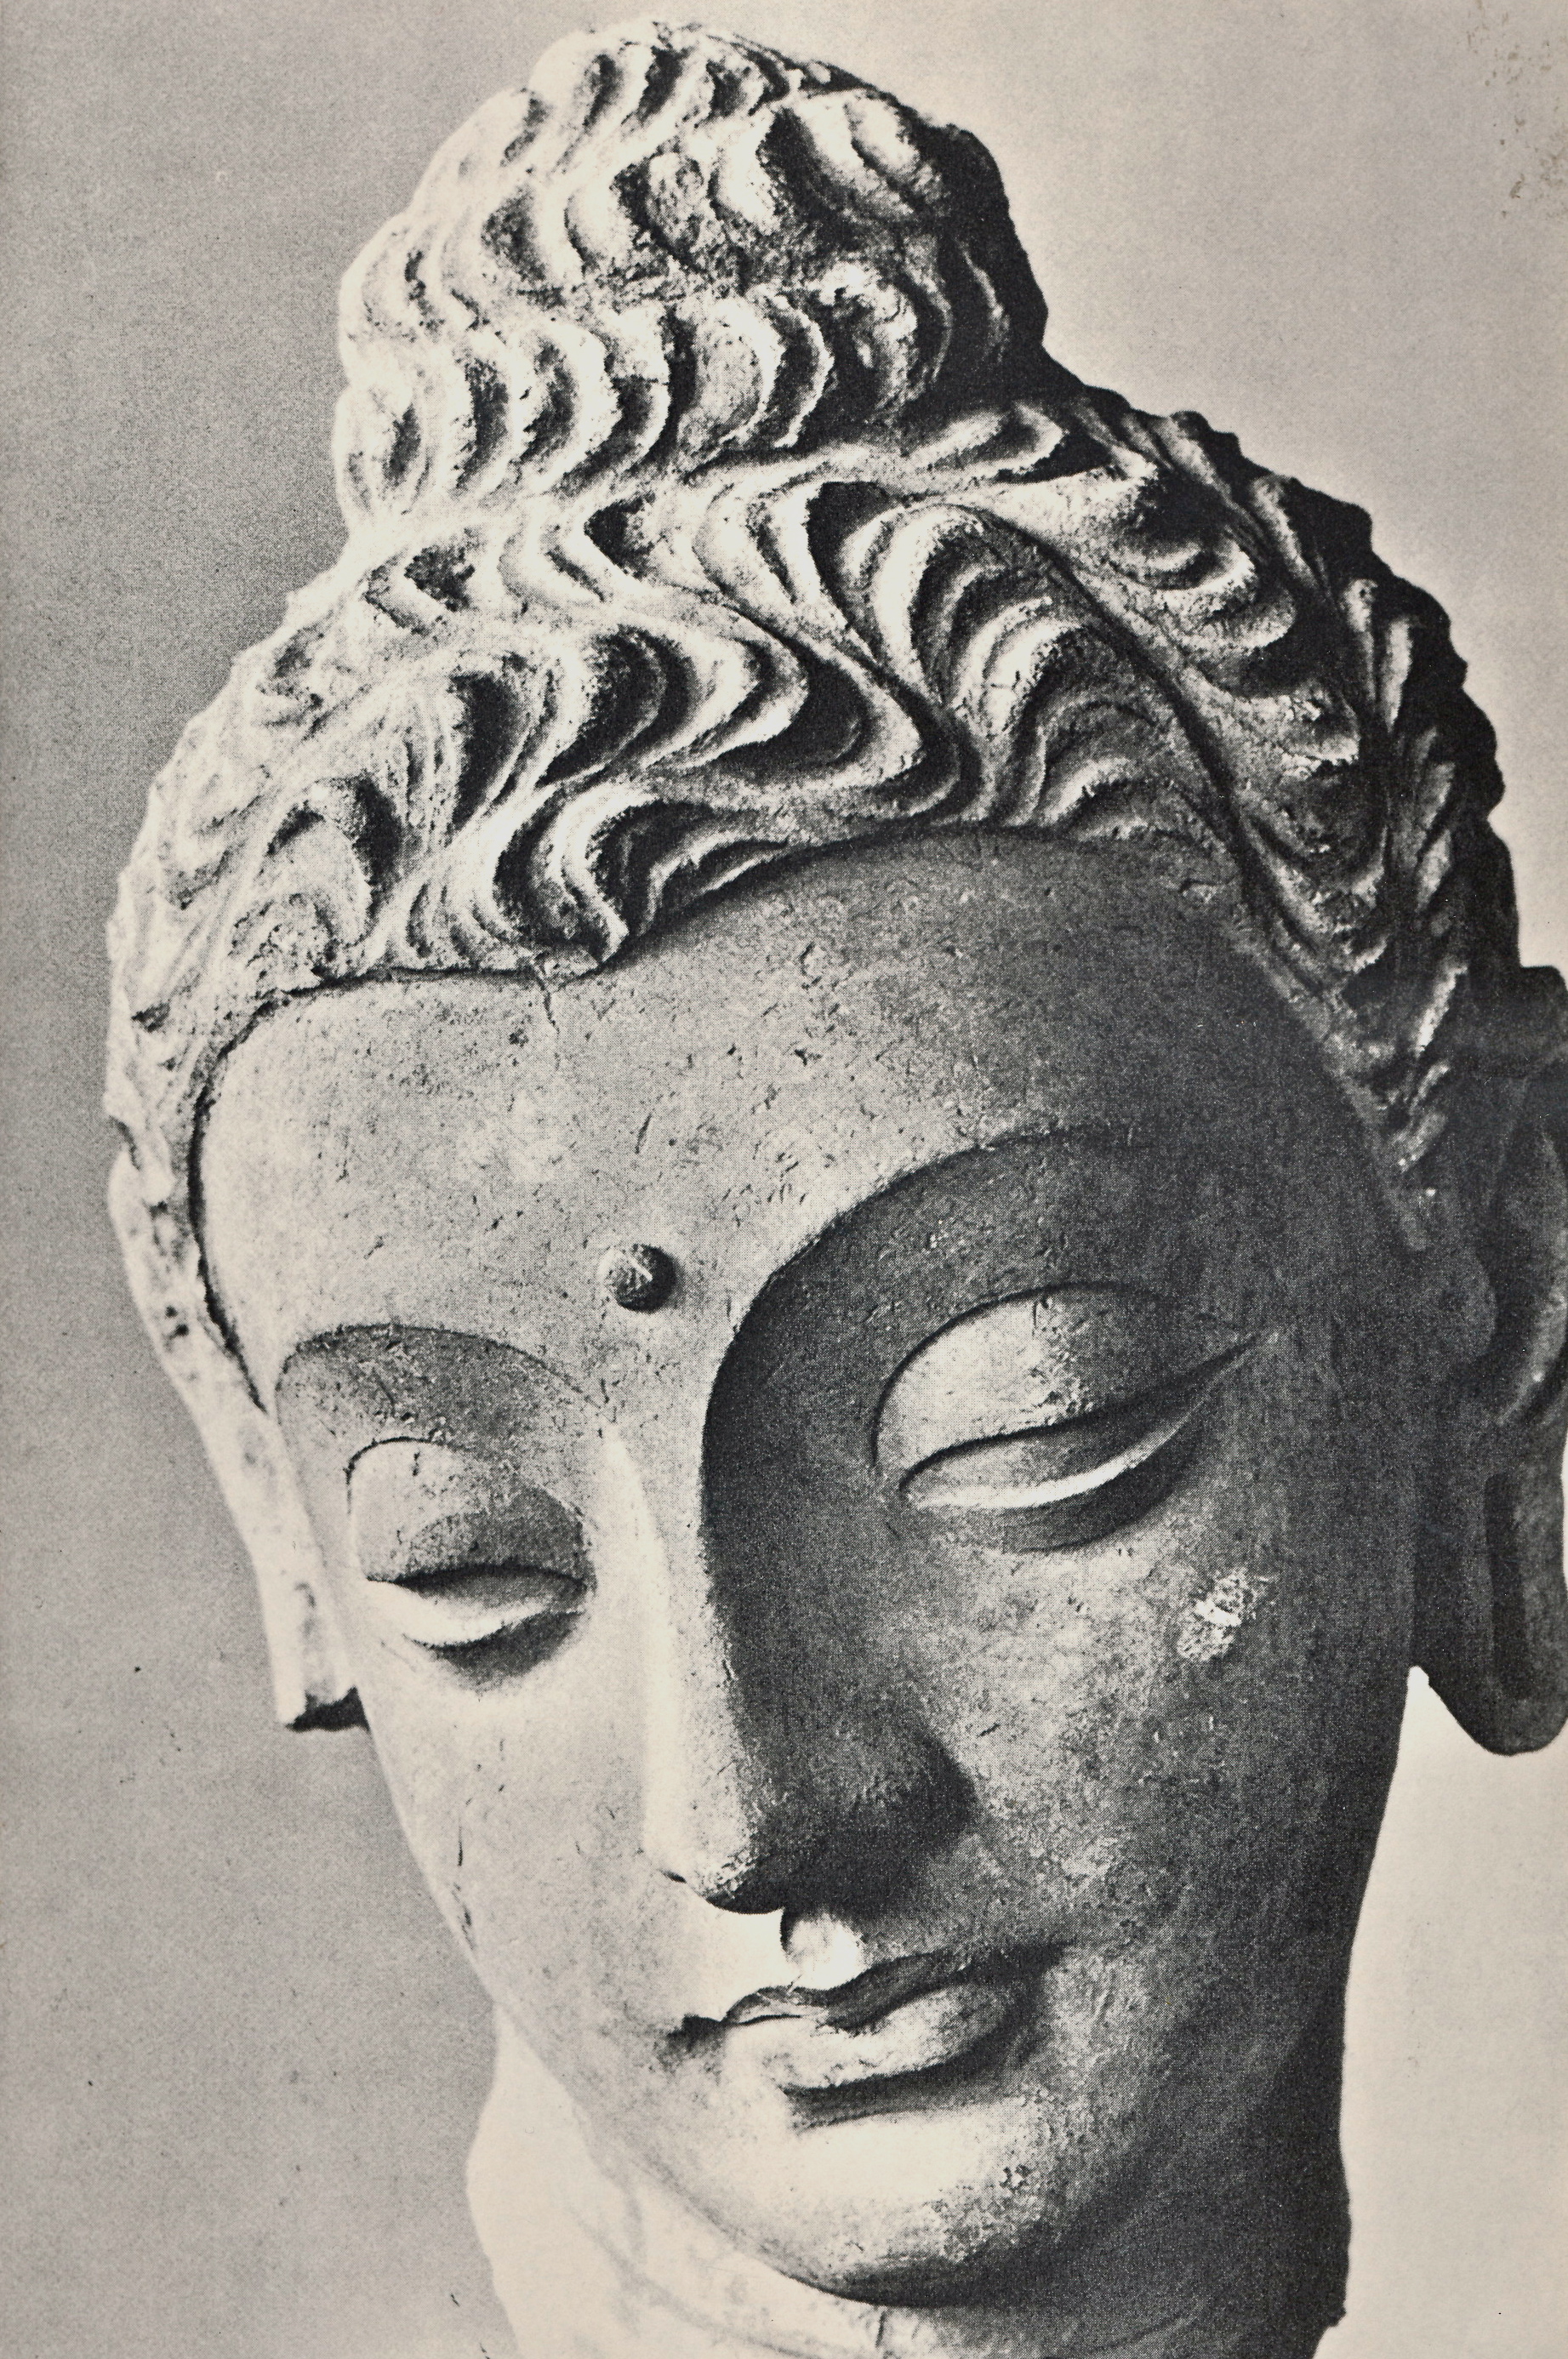 Buddha face over ornate mandala round pattern Vector Image